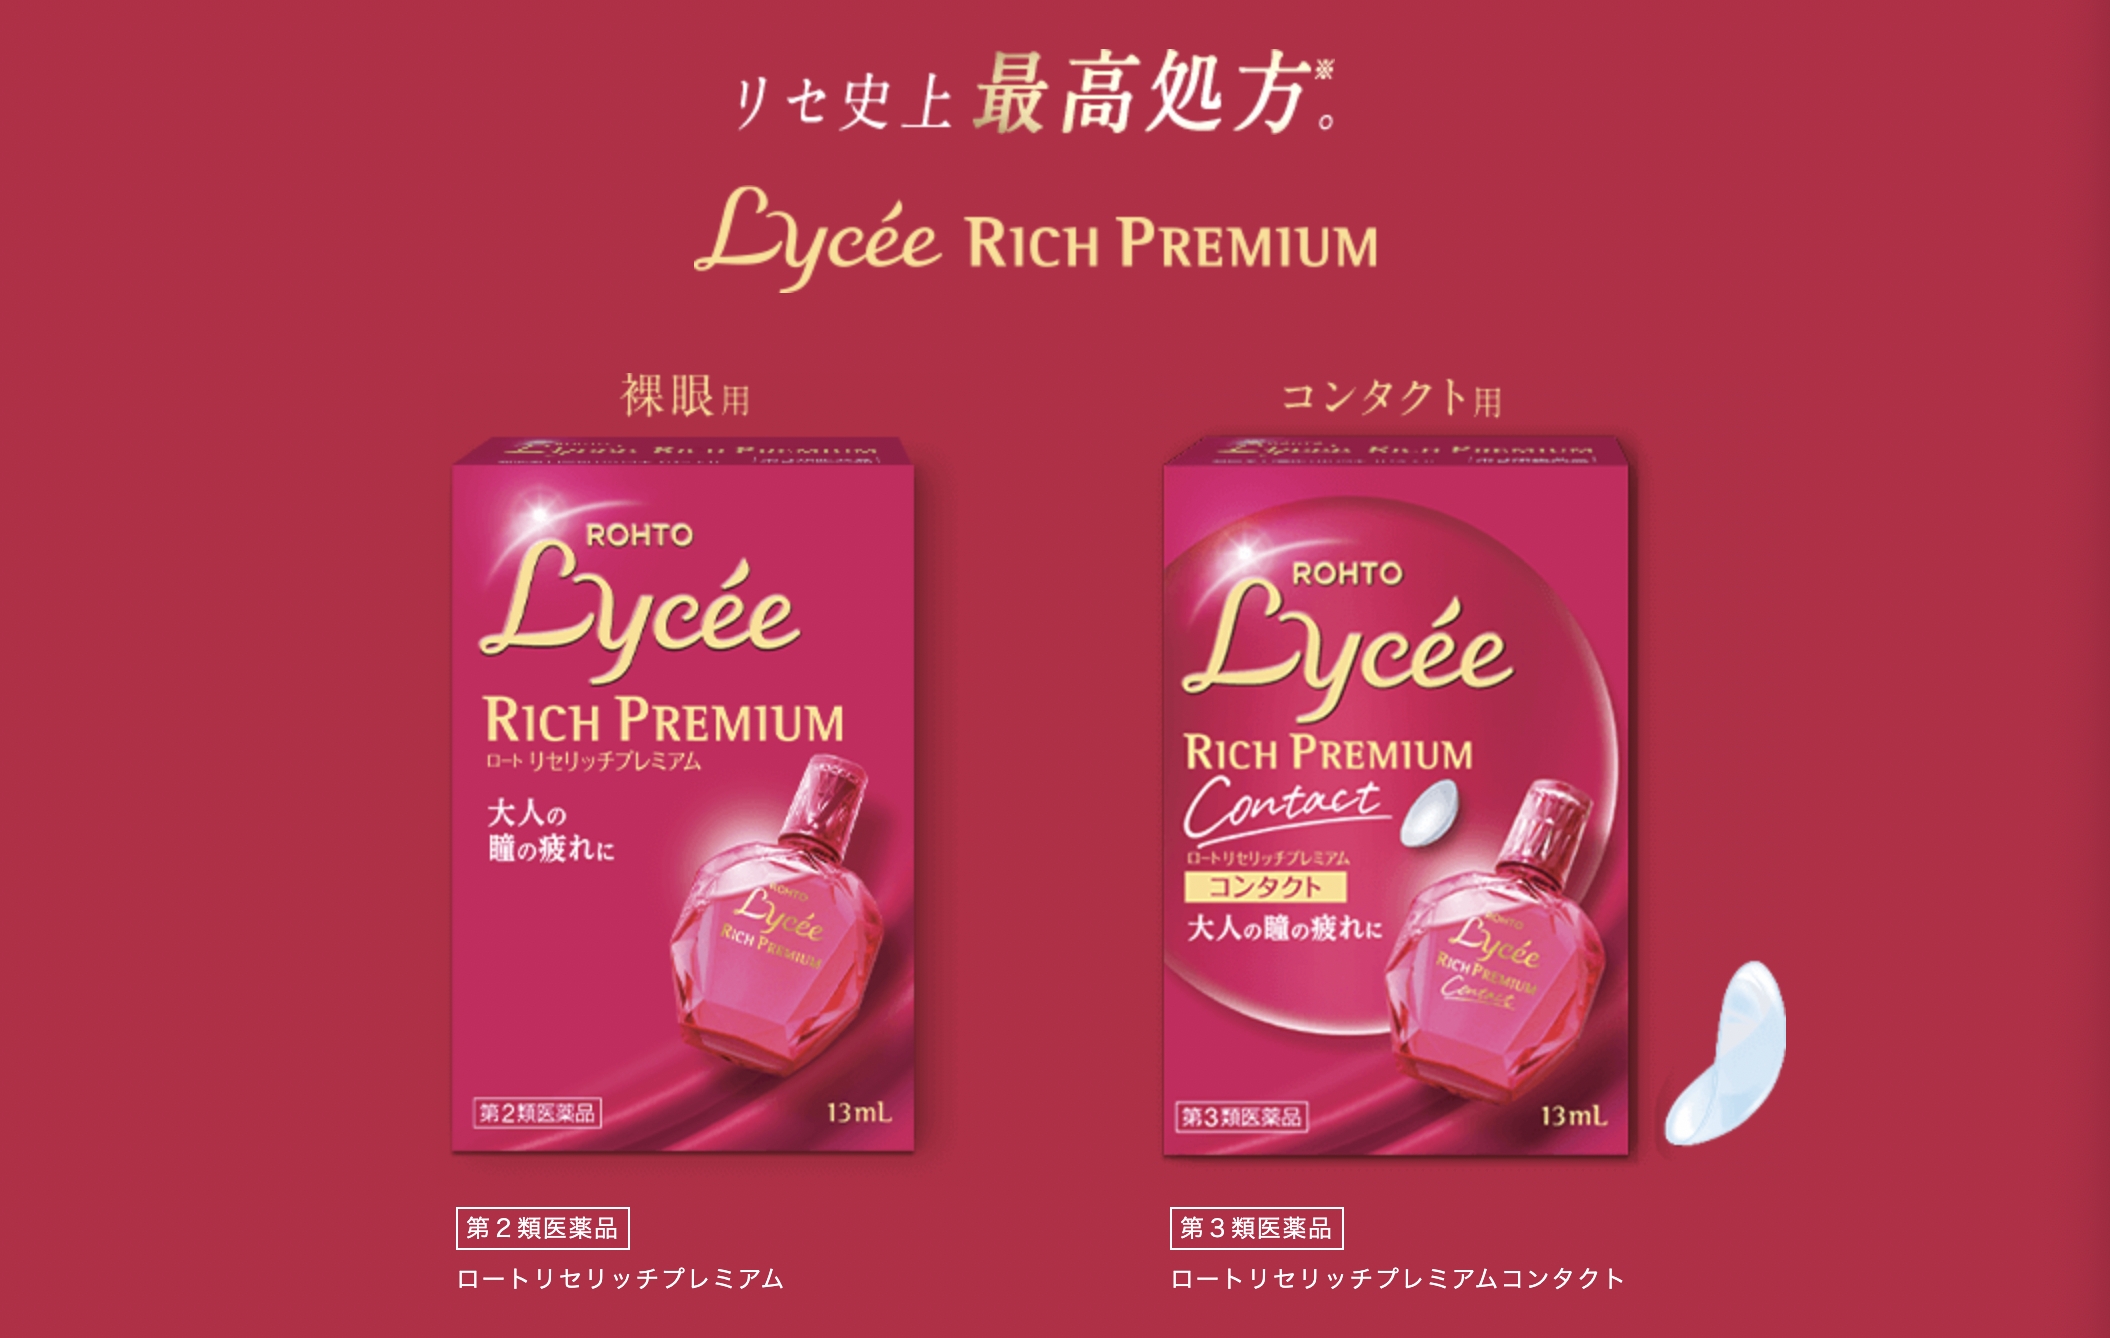 ROHTO Lycee Rich Premium Eye Drops 13ml